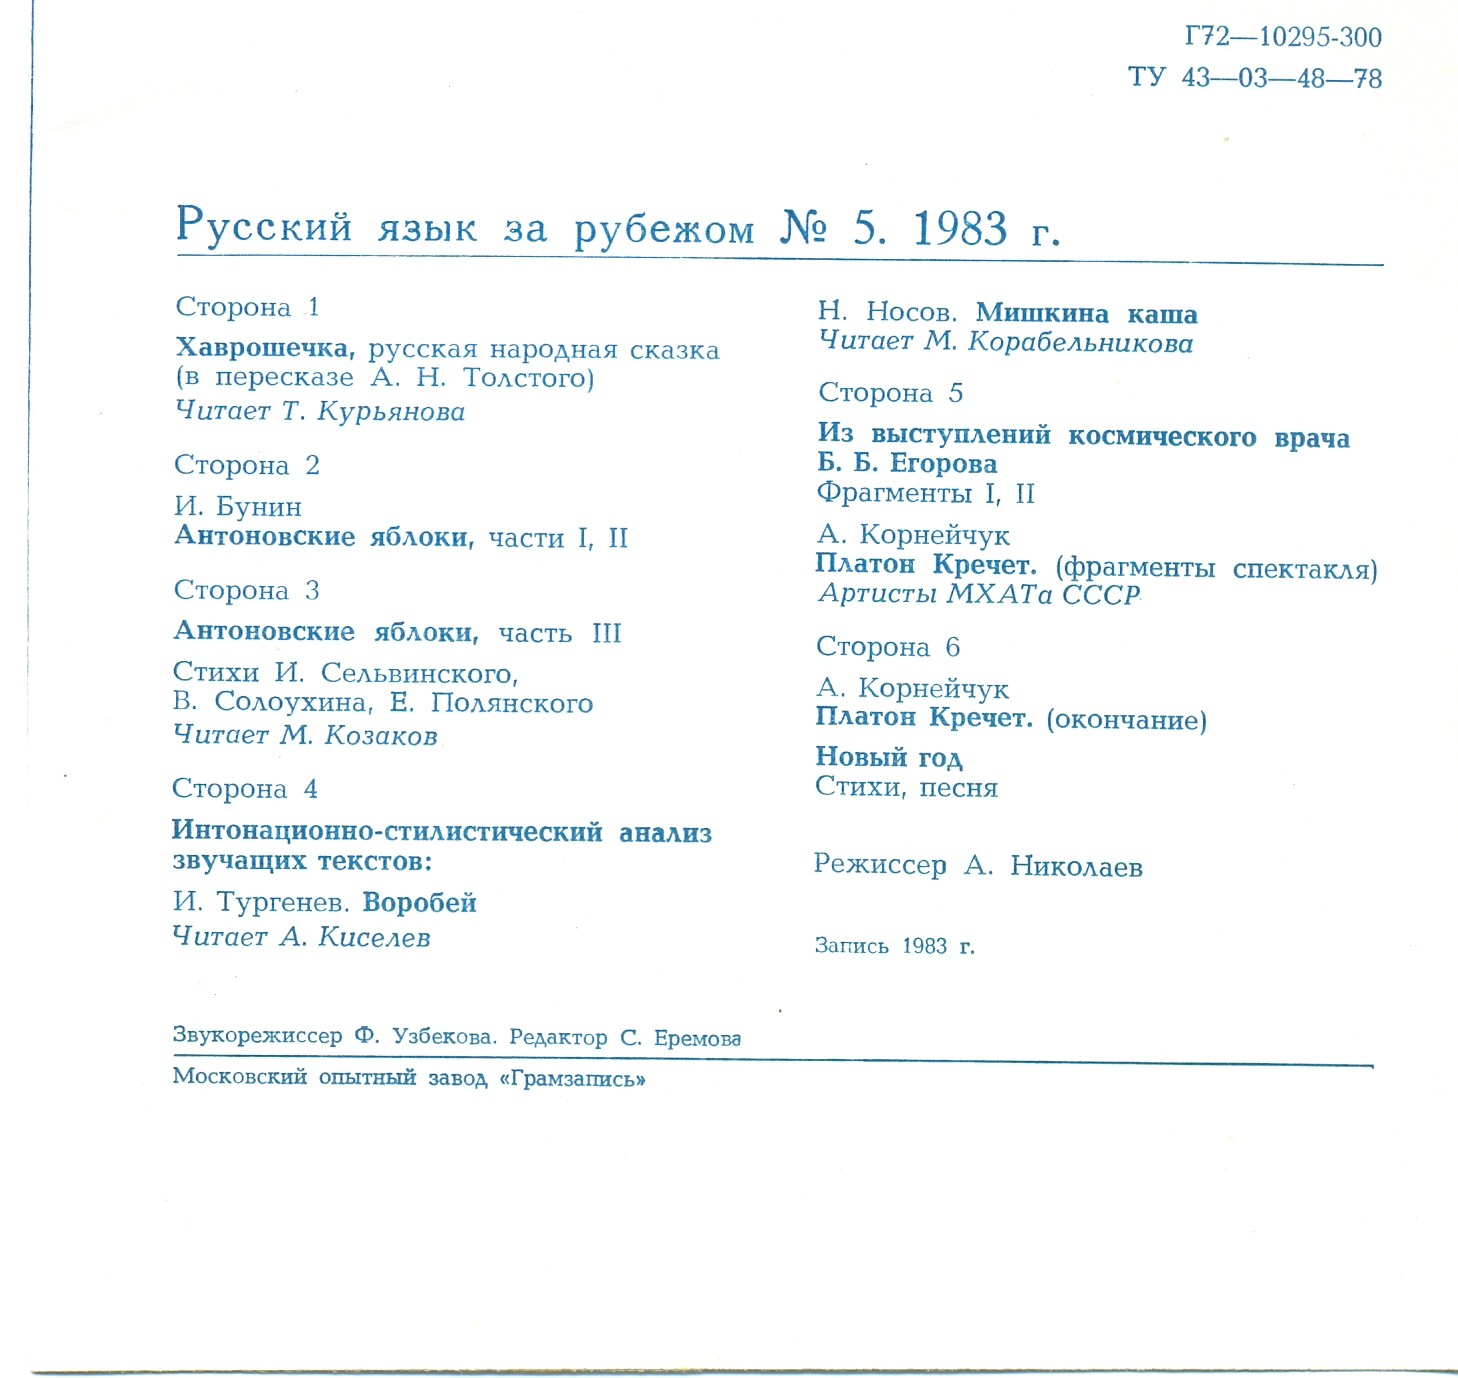 "РУССКИЙ ЯЗЫК ЗА РУБЕЖОМ" , № 5 - 1983